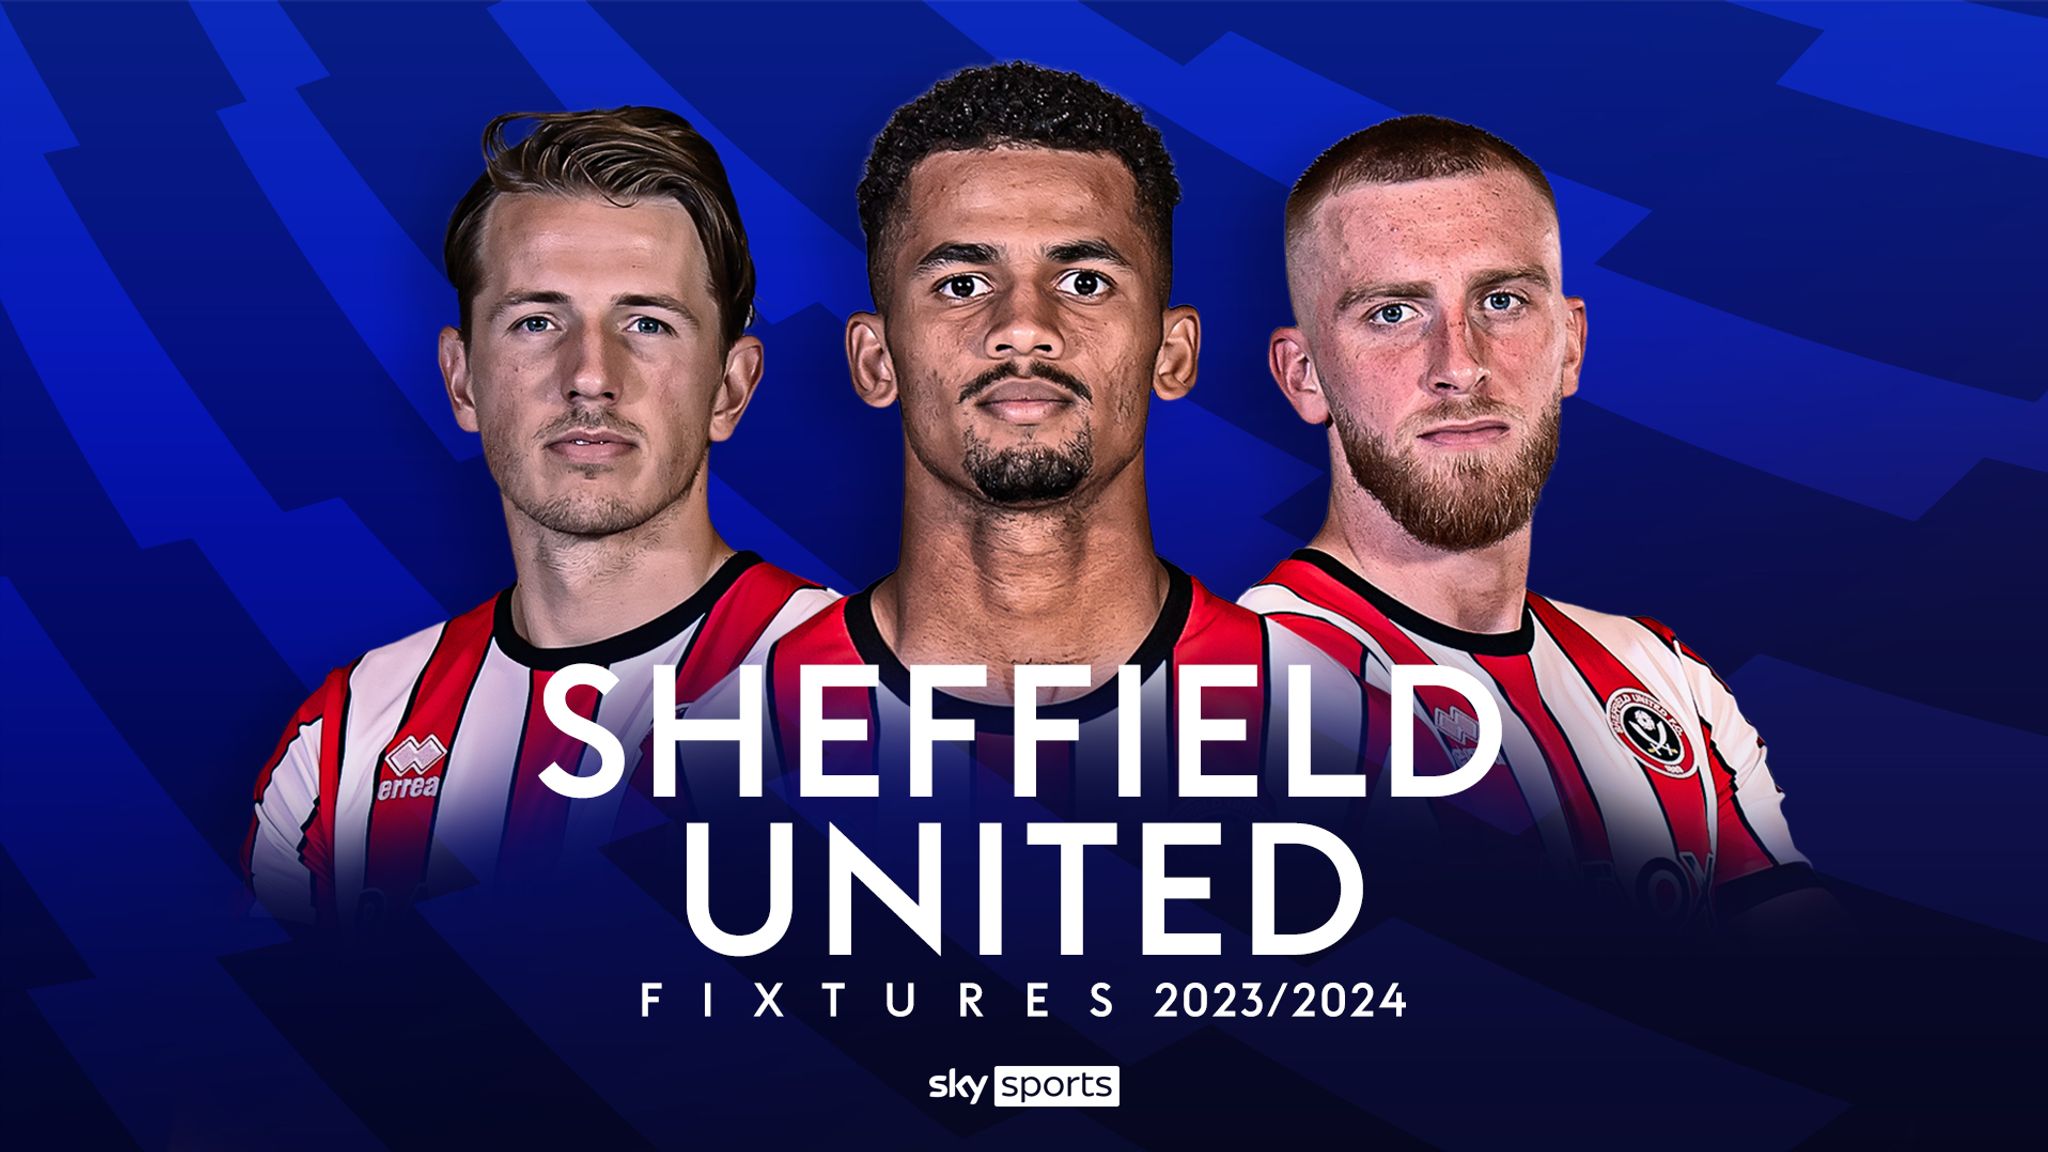 Sheffield United Premier League 2023/24 fixtures and schedule